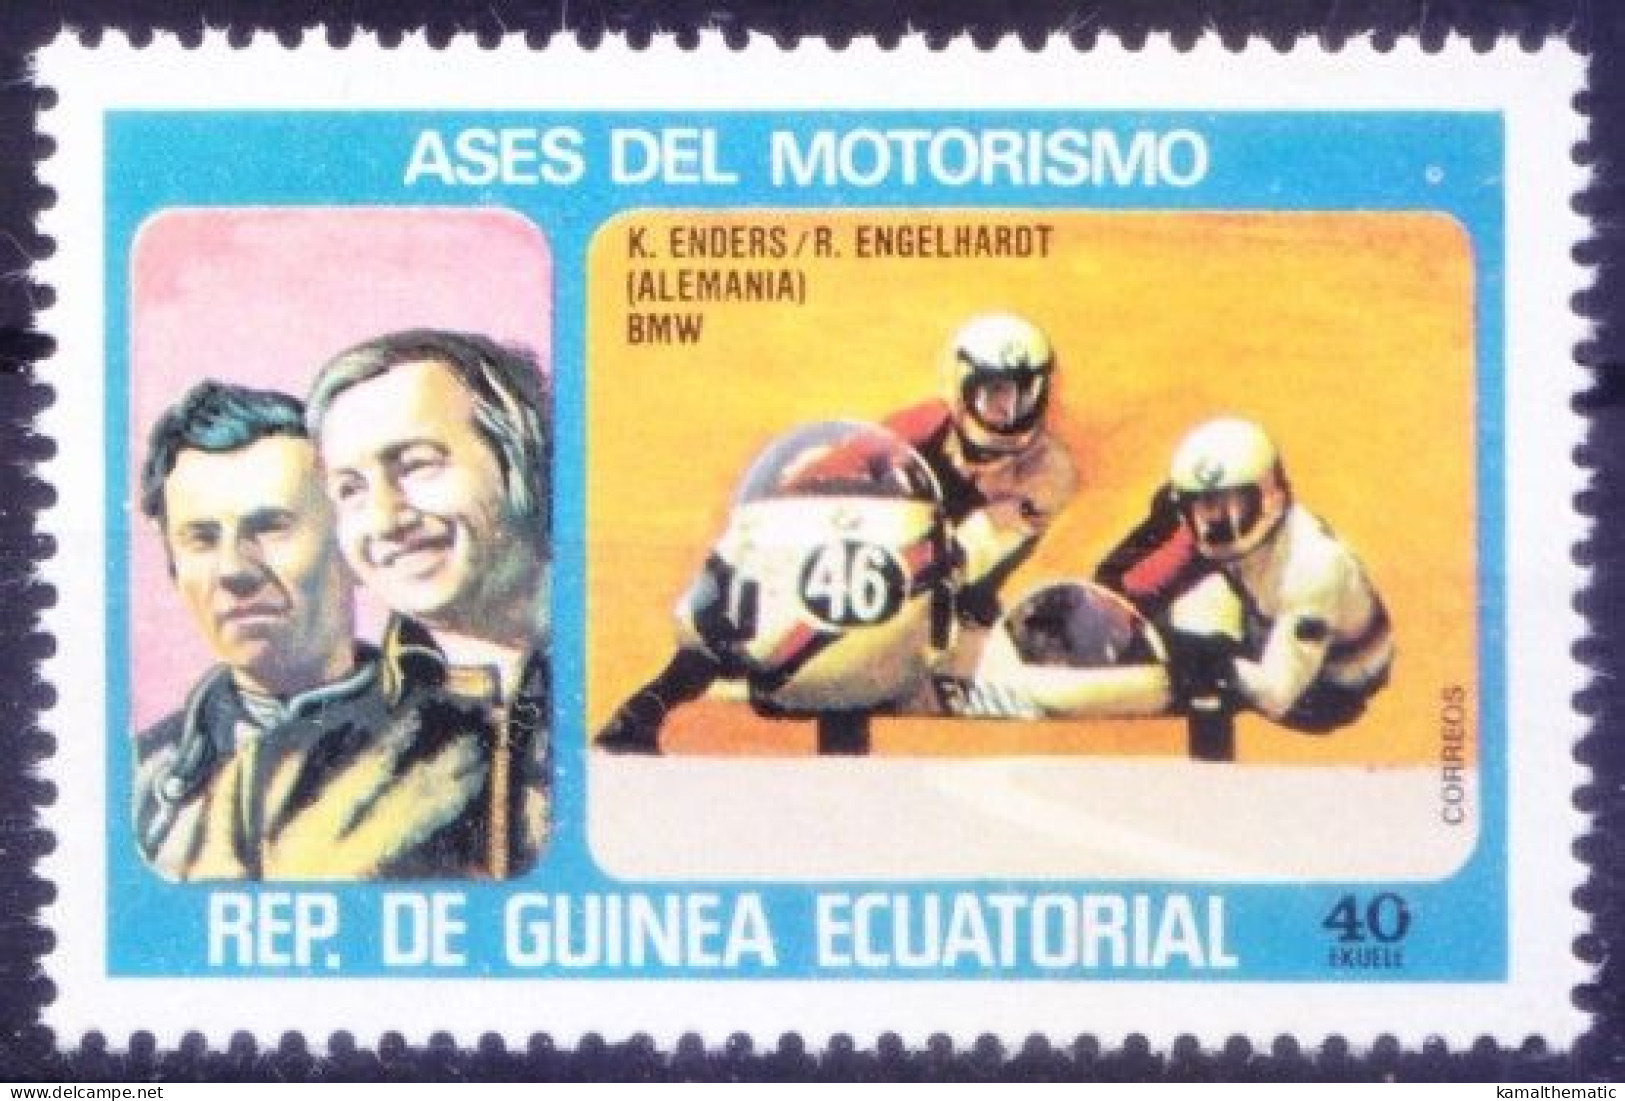 Equatorial Guinea 1976 MNH, Racing Motorcyclists K. Enders & R. Engelhardt, Sports - Cars